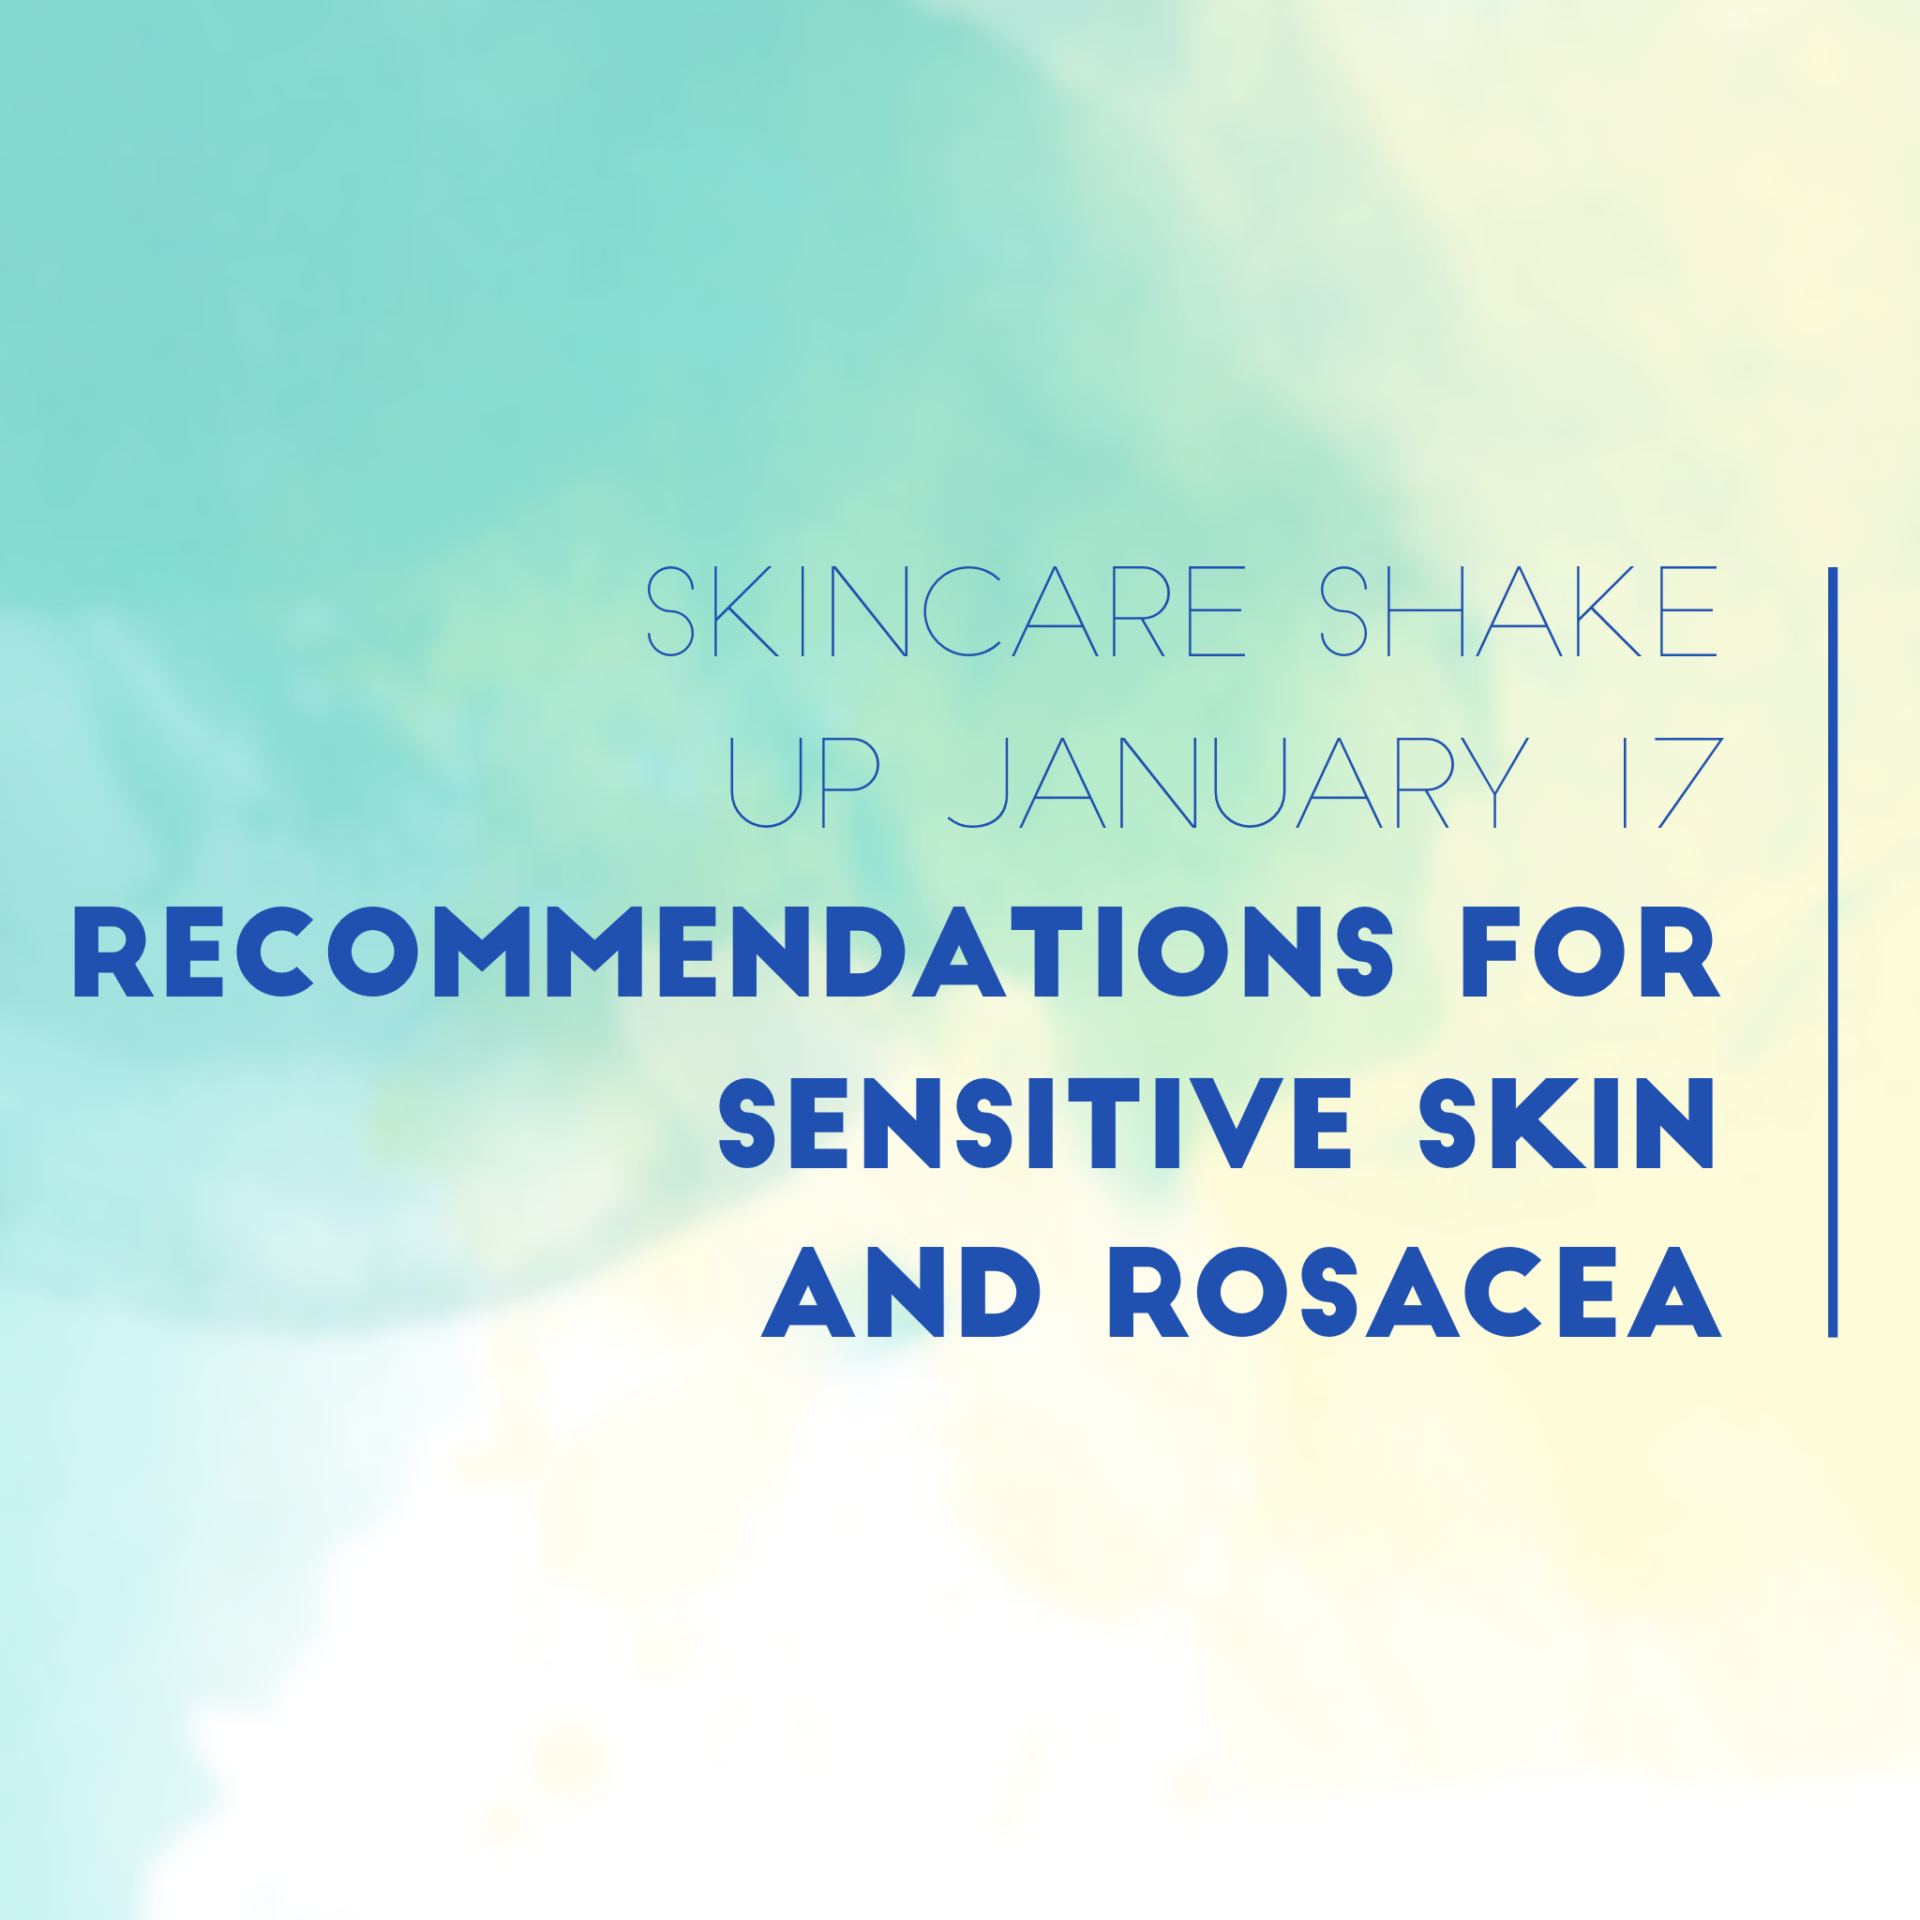 Skincare for sensitive skin and rosacea - Skincare Shake Up January 17